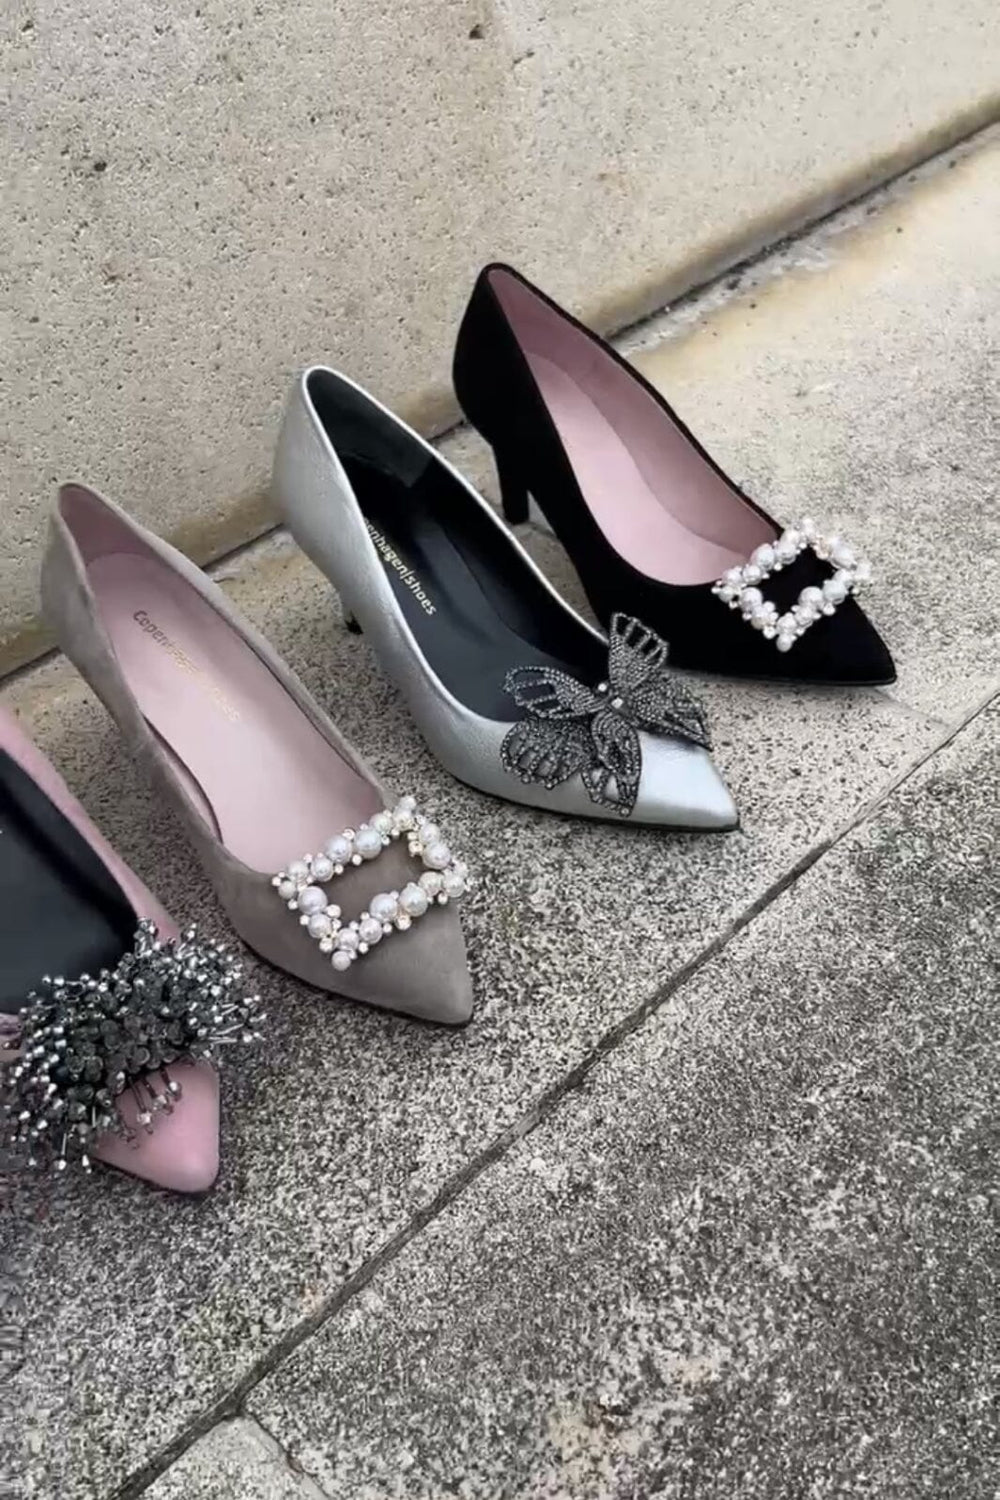 Copenhagen Shoes - Pearls And Diamonds - 0001 Black Stiletter 